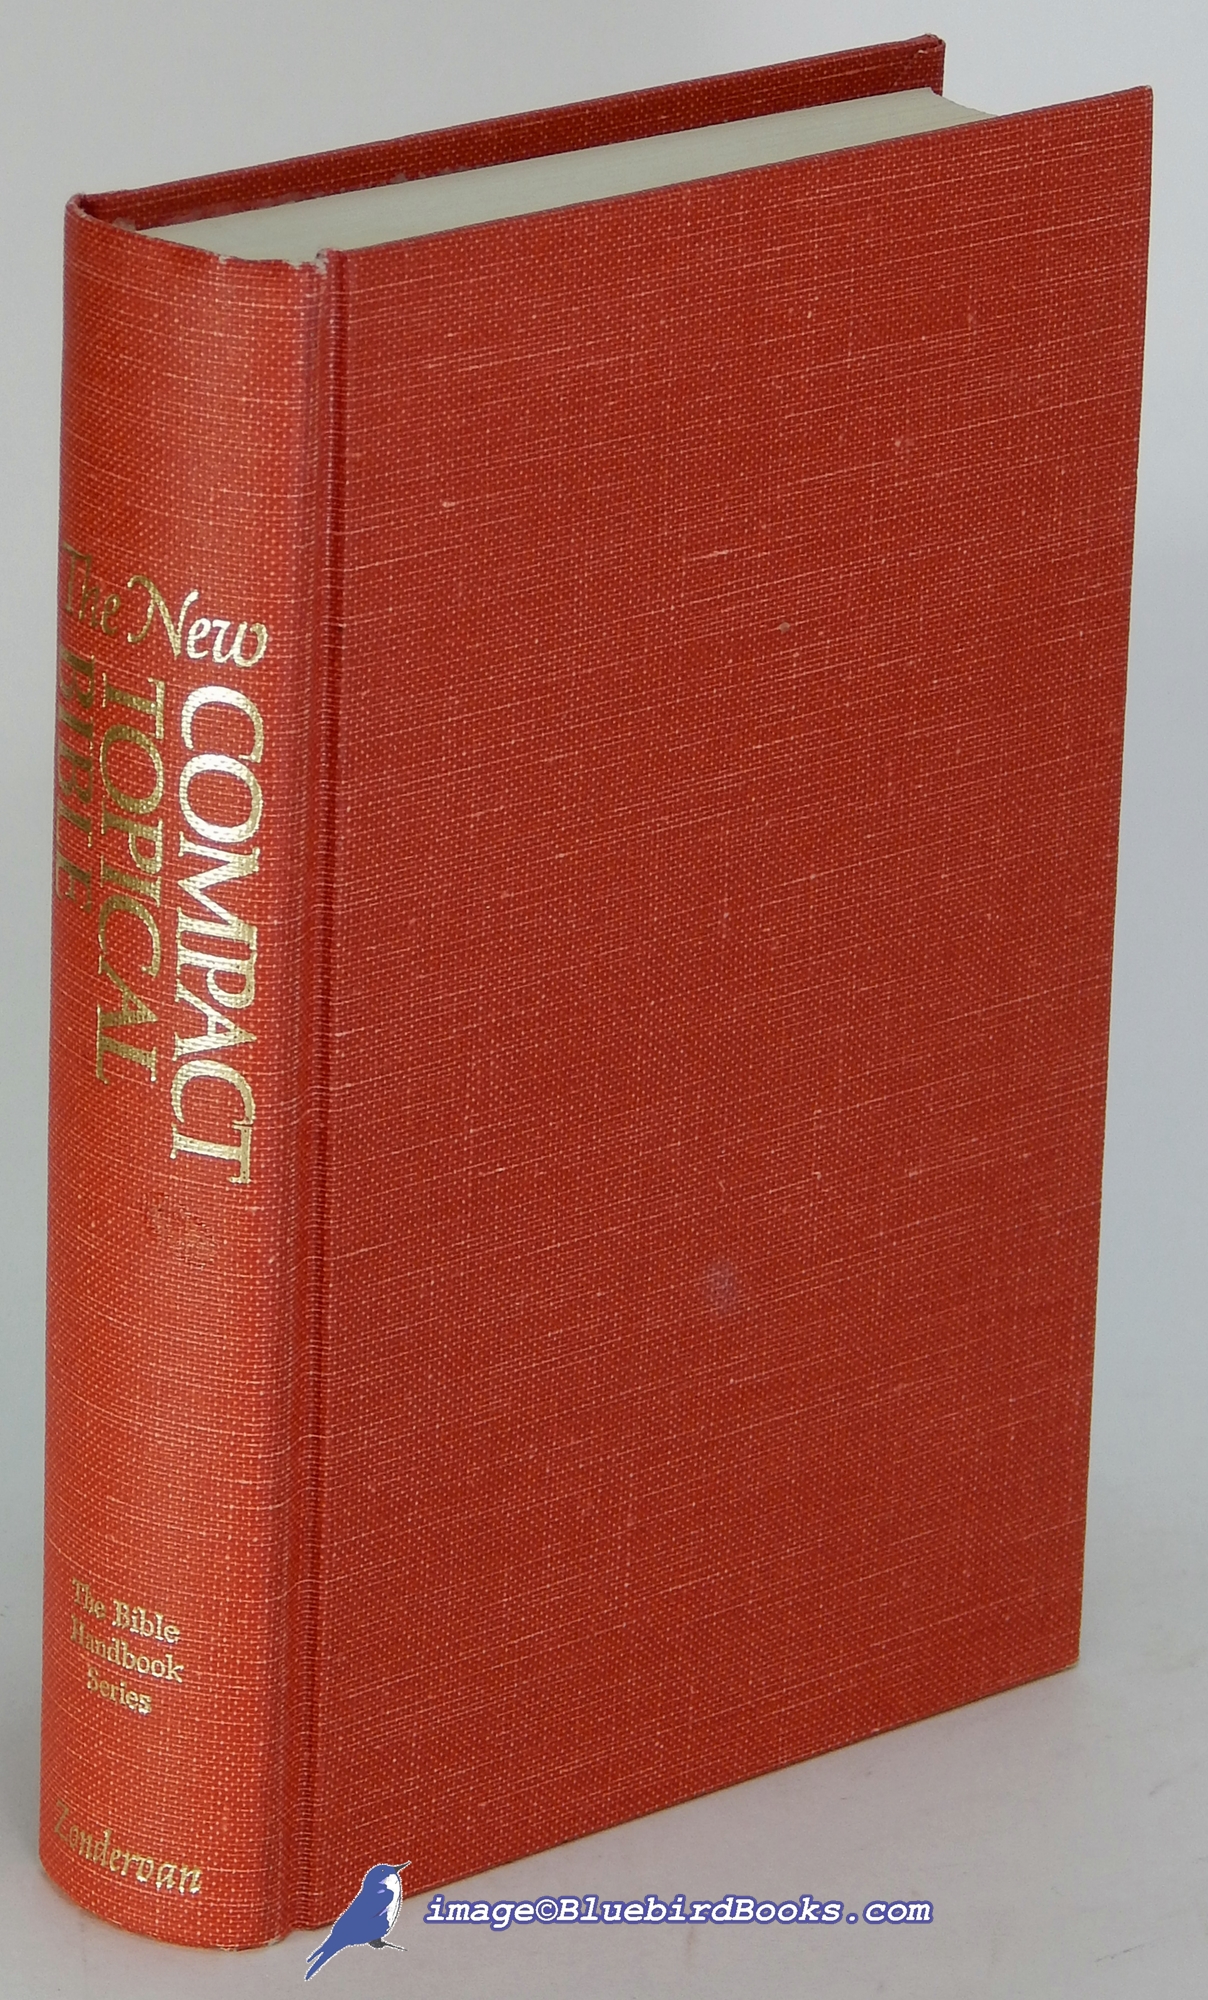 WHARTON, GARY C. (COMPILER) - The New Compact Topical Bible